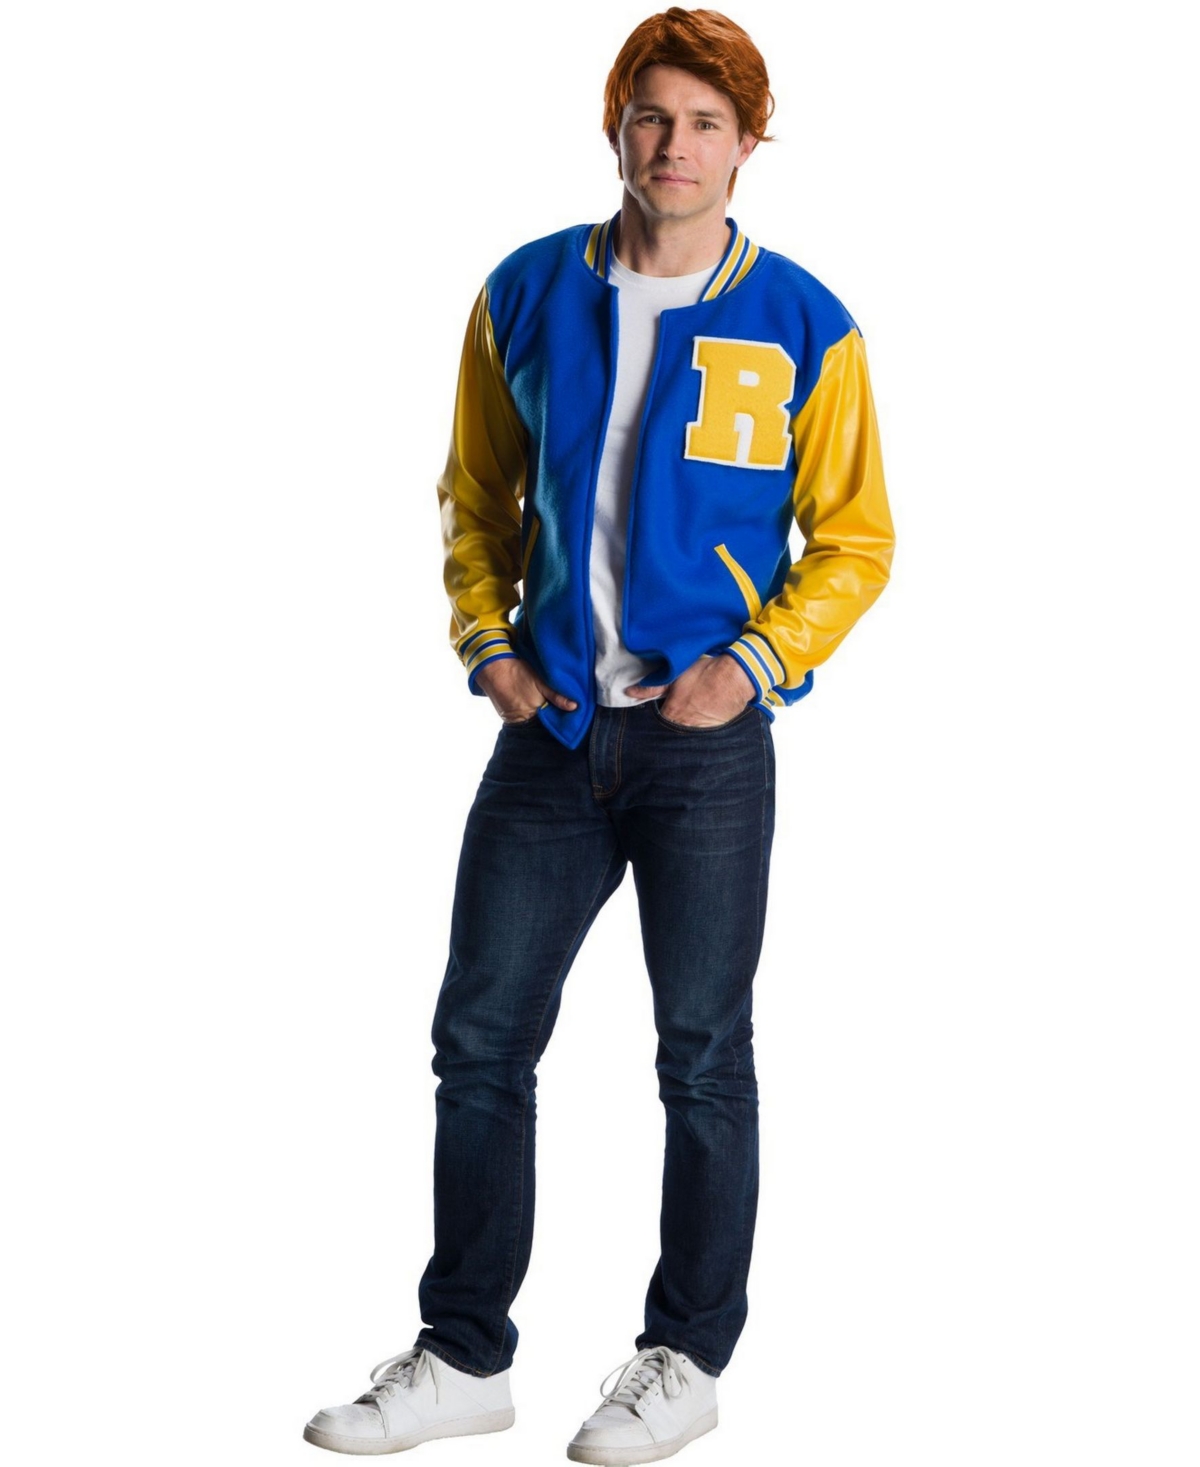 BuySeasons Men's Riverdale Archie Andrews Deluxe Adult Costume